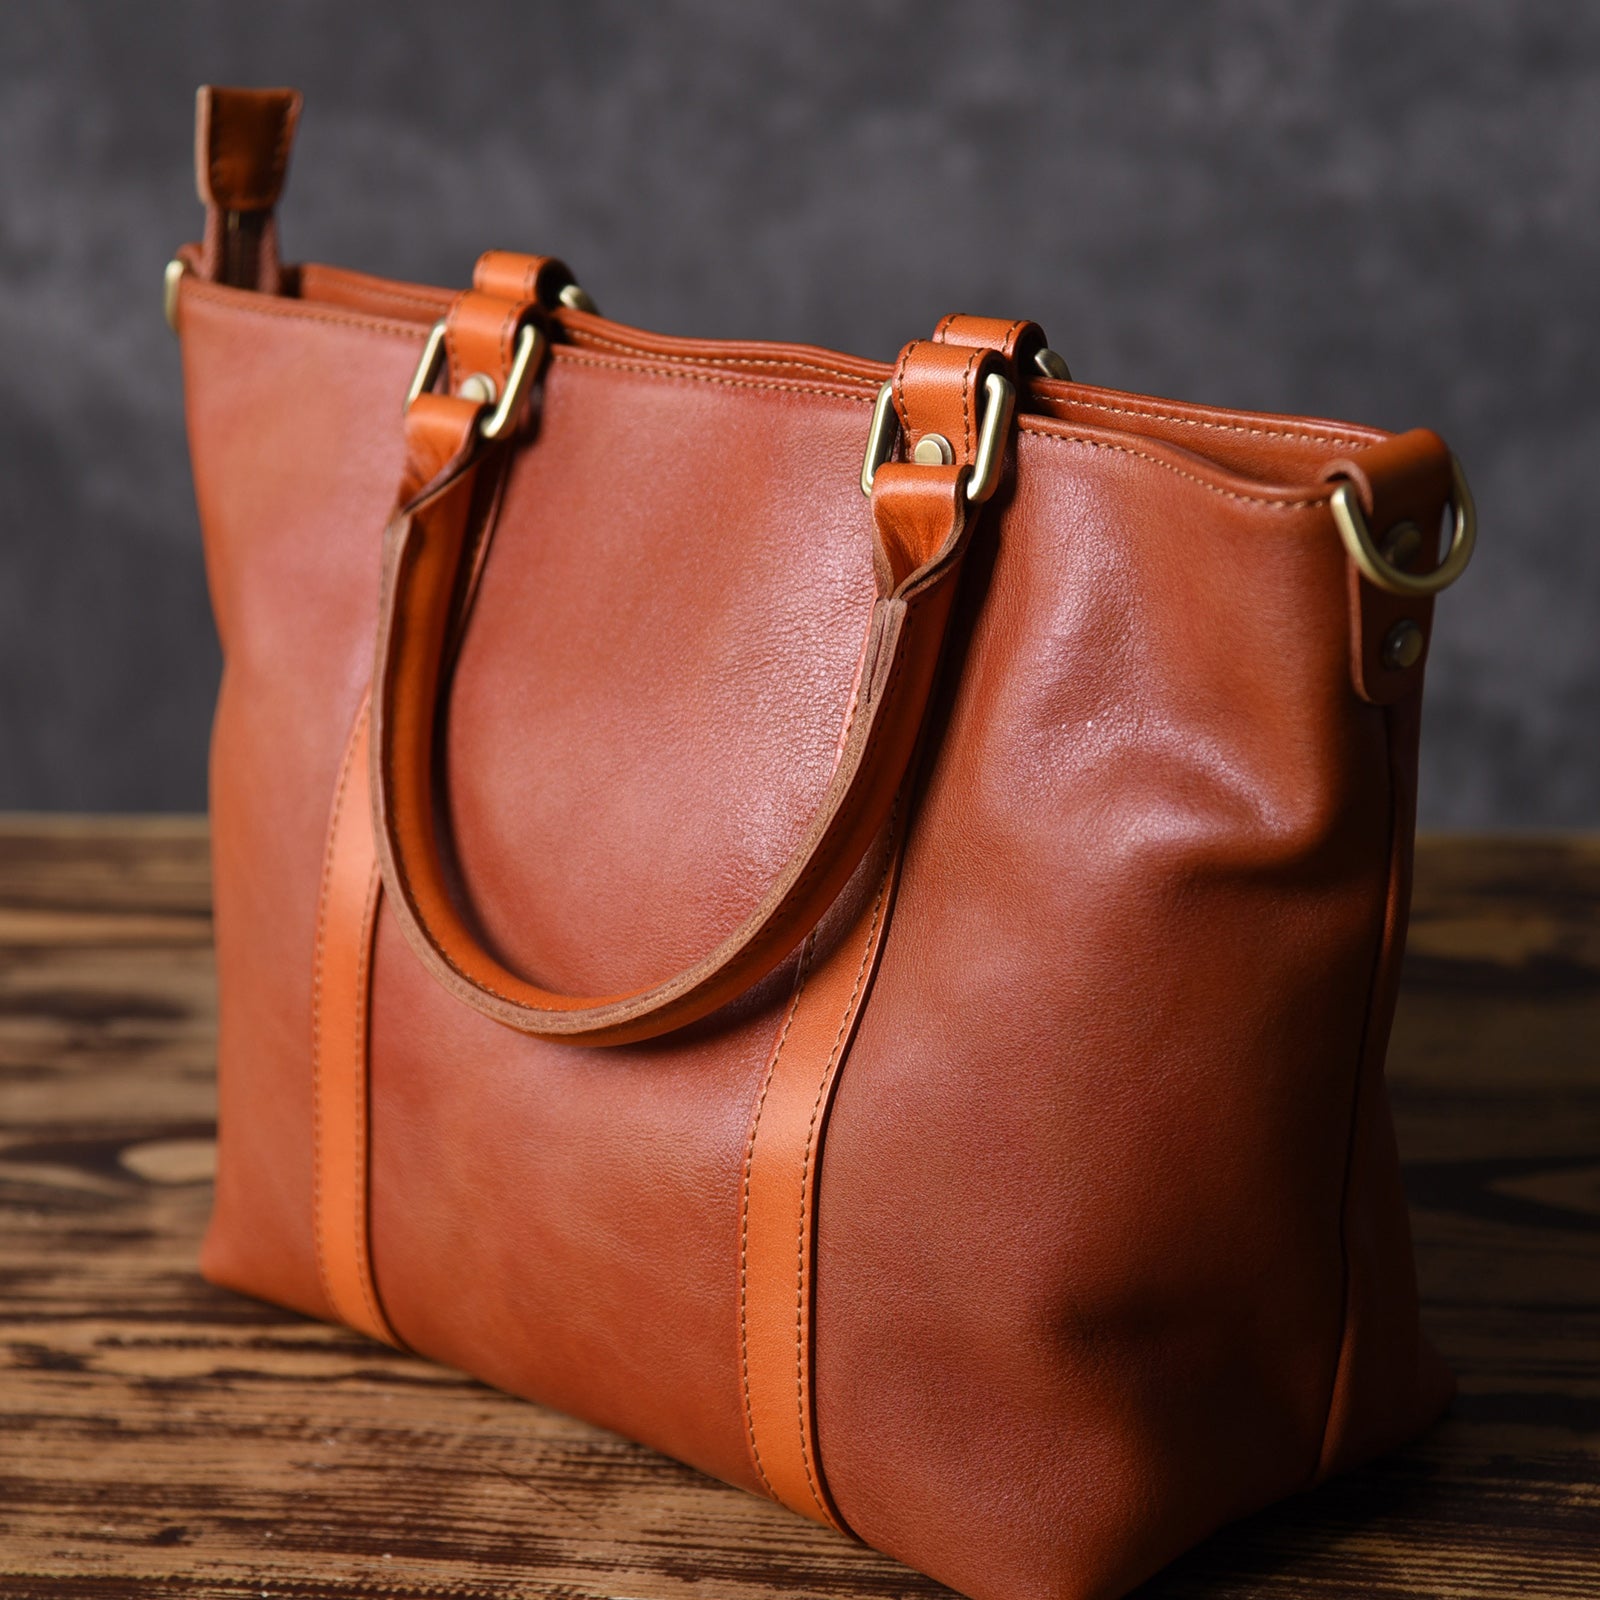 Monogram Brown Leather Bags And Handbags For Women Keweenaw Bay Indian Community 